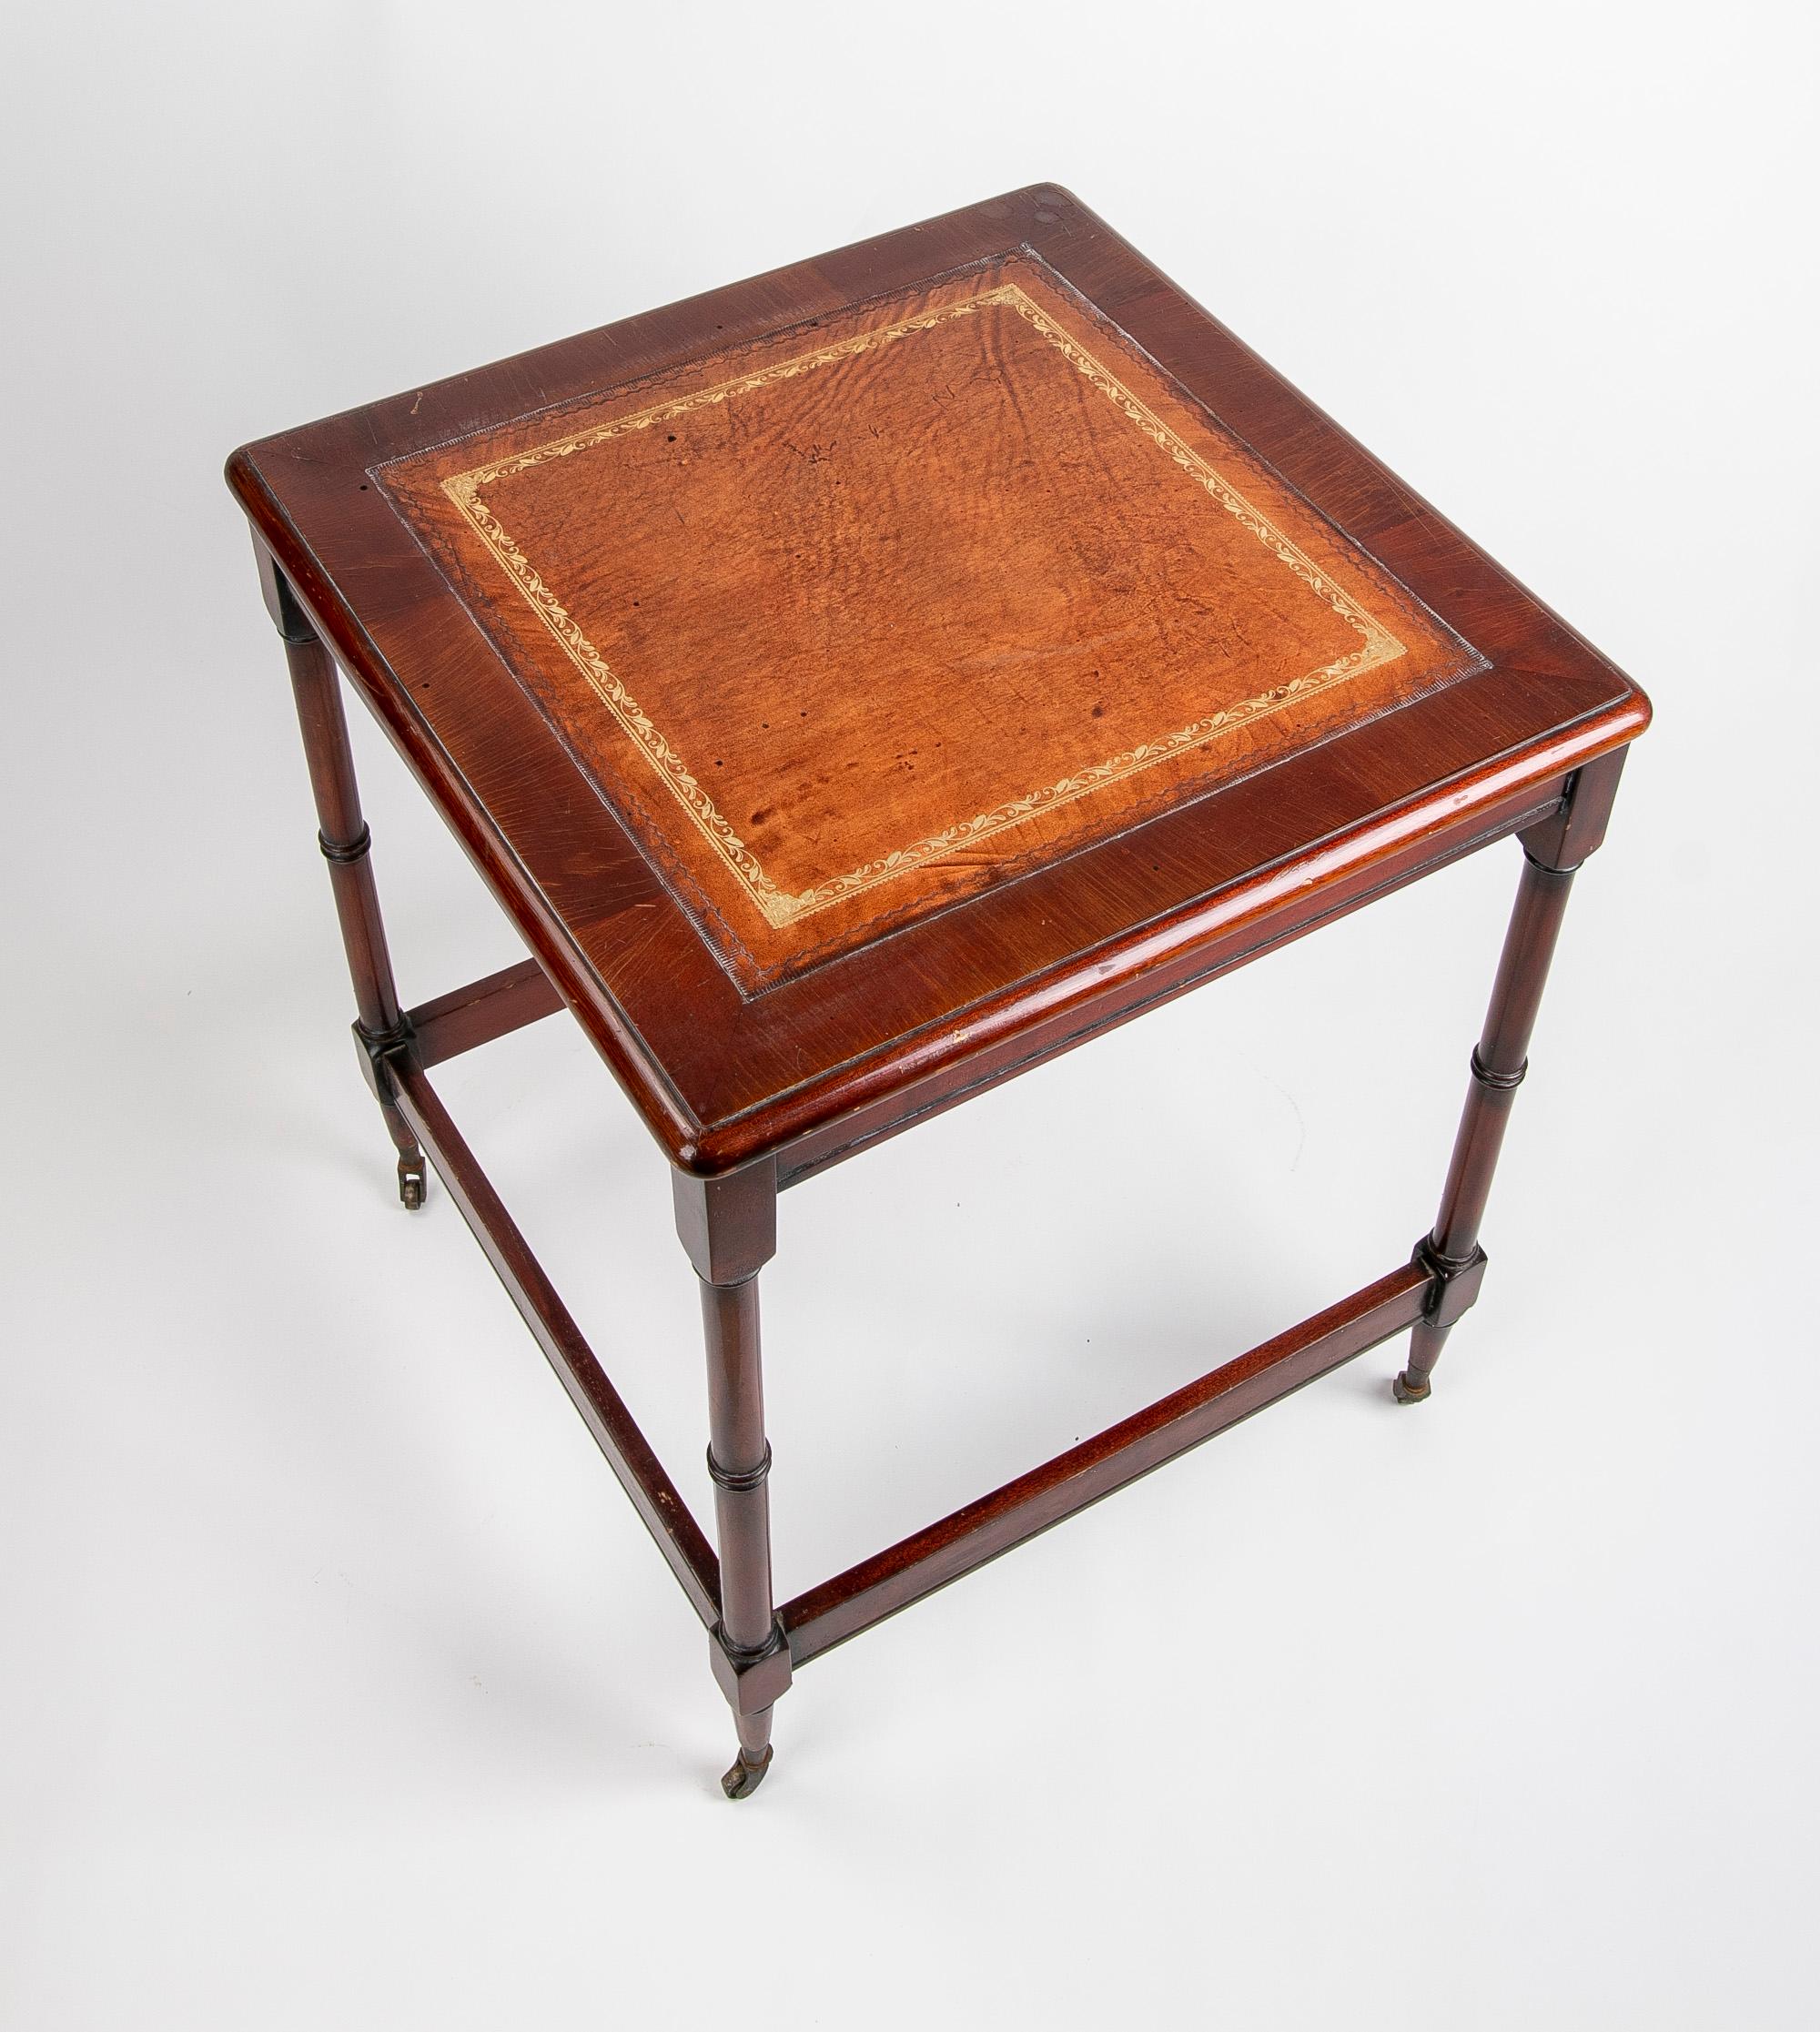 19th Century English mahogany side table with castors with a 19th century mahogany top.